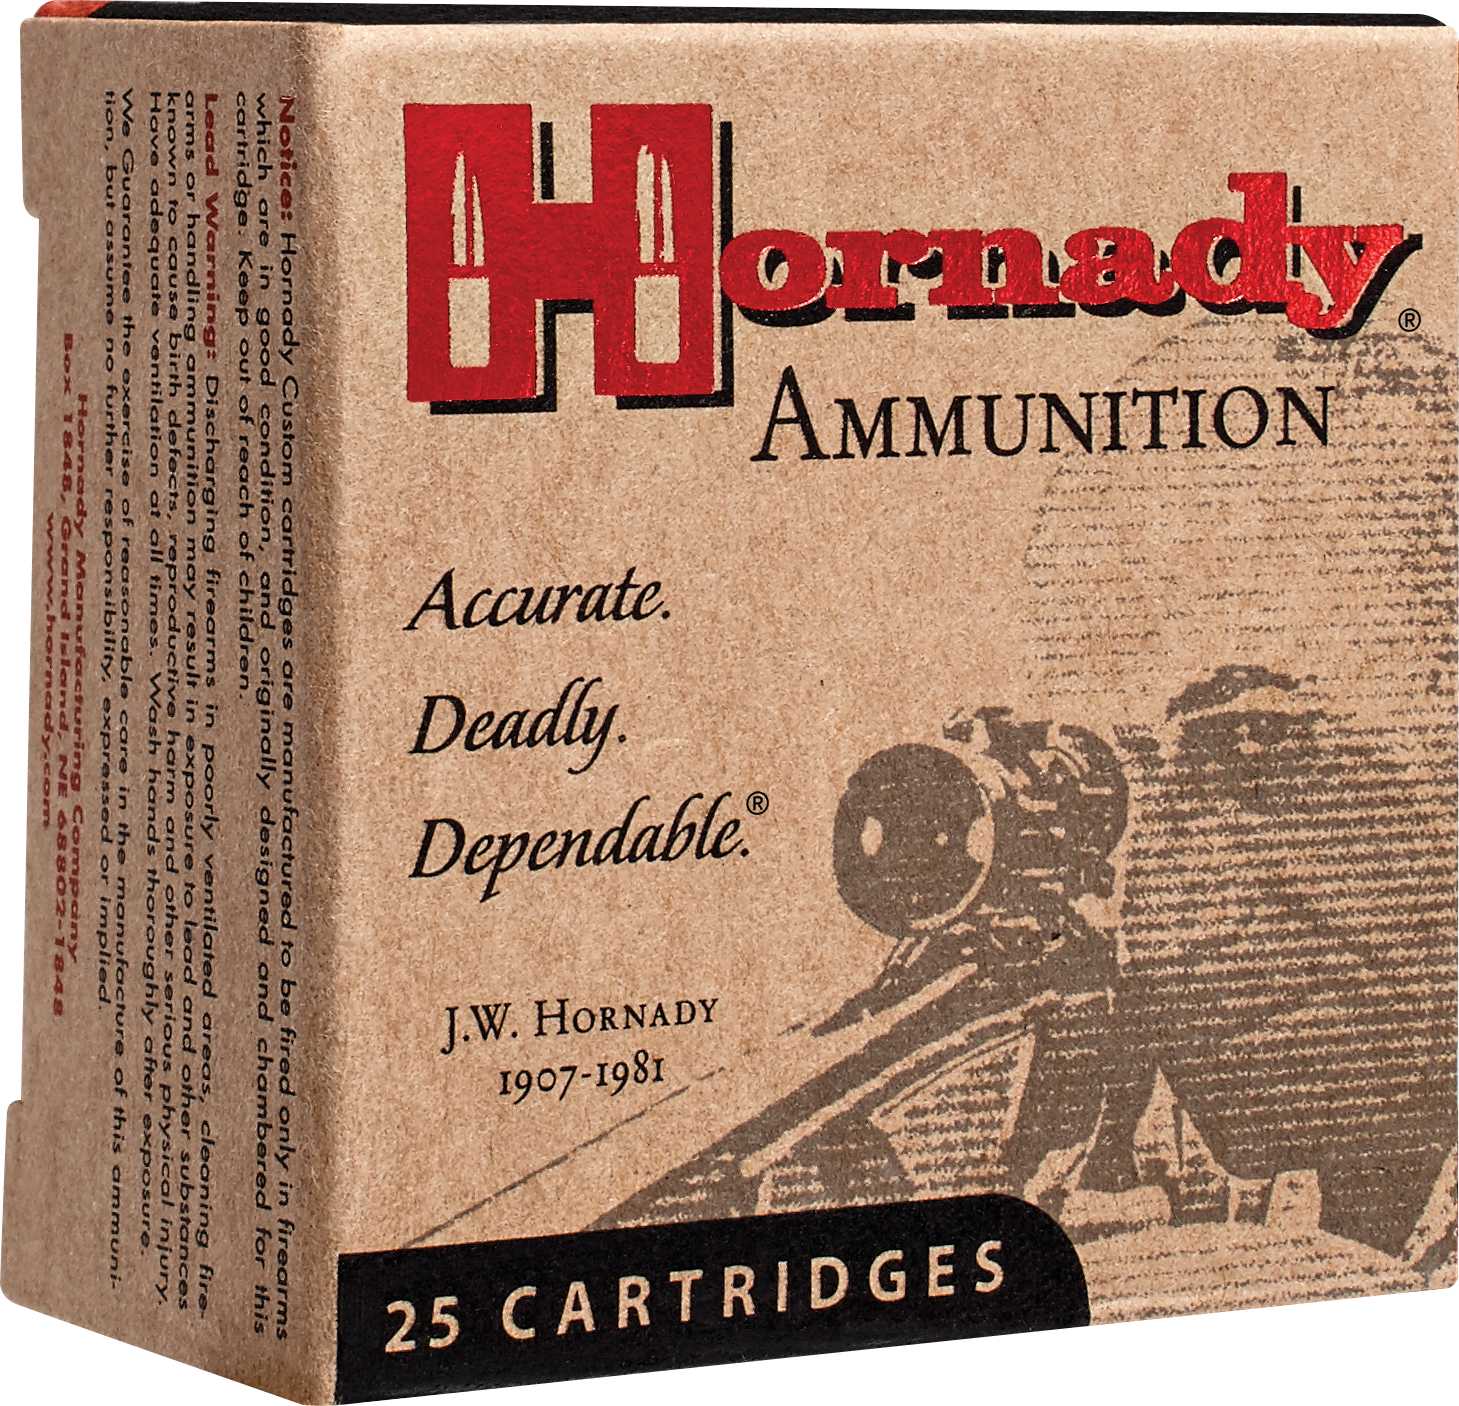 44 Rem Magnum 20 Rounds Ammunition Hornady 300 Grain Hollow Point